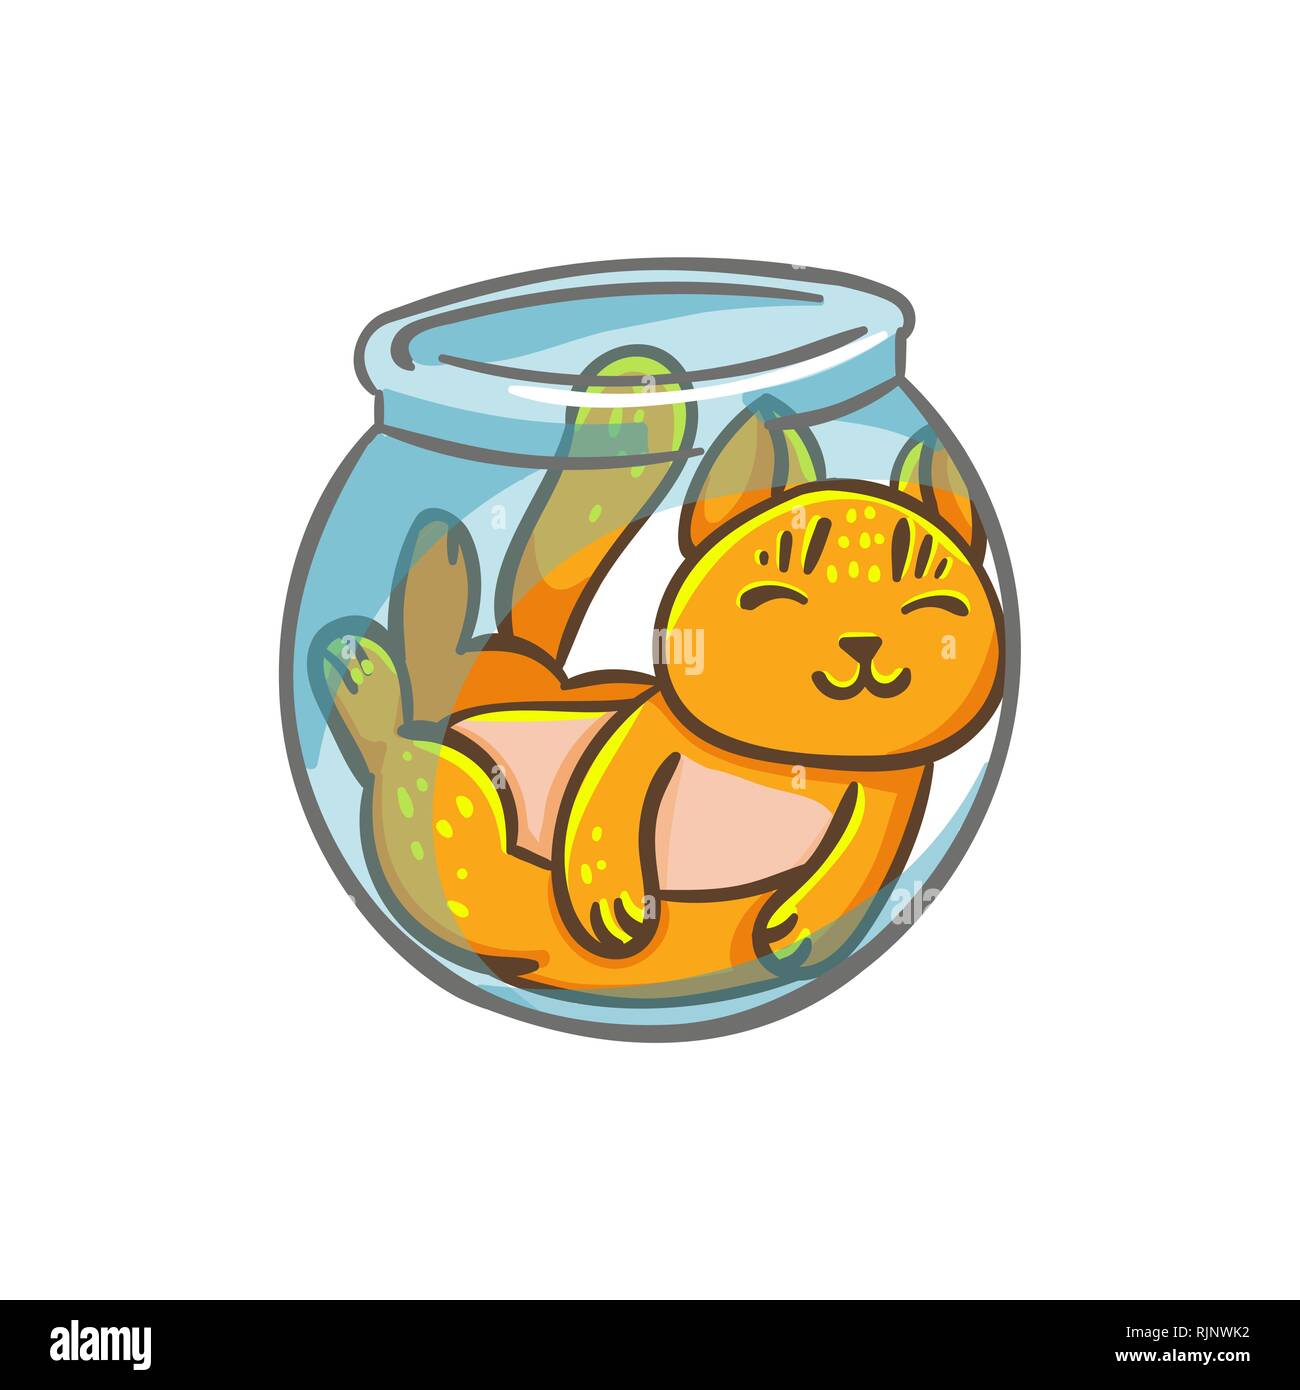 Download 51 Background Aquarium Cat Gratis Terbaik